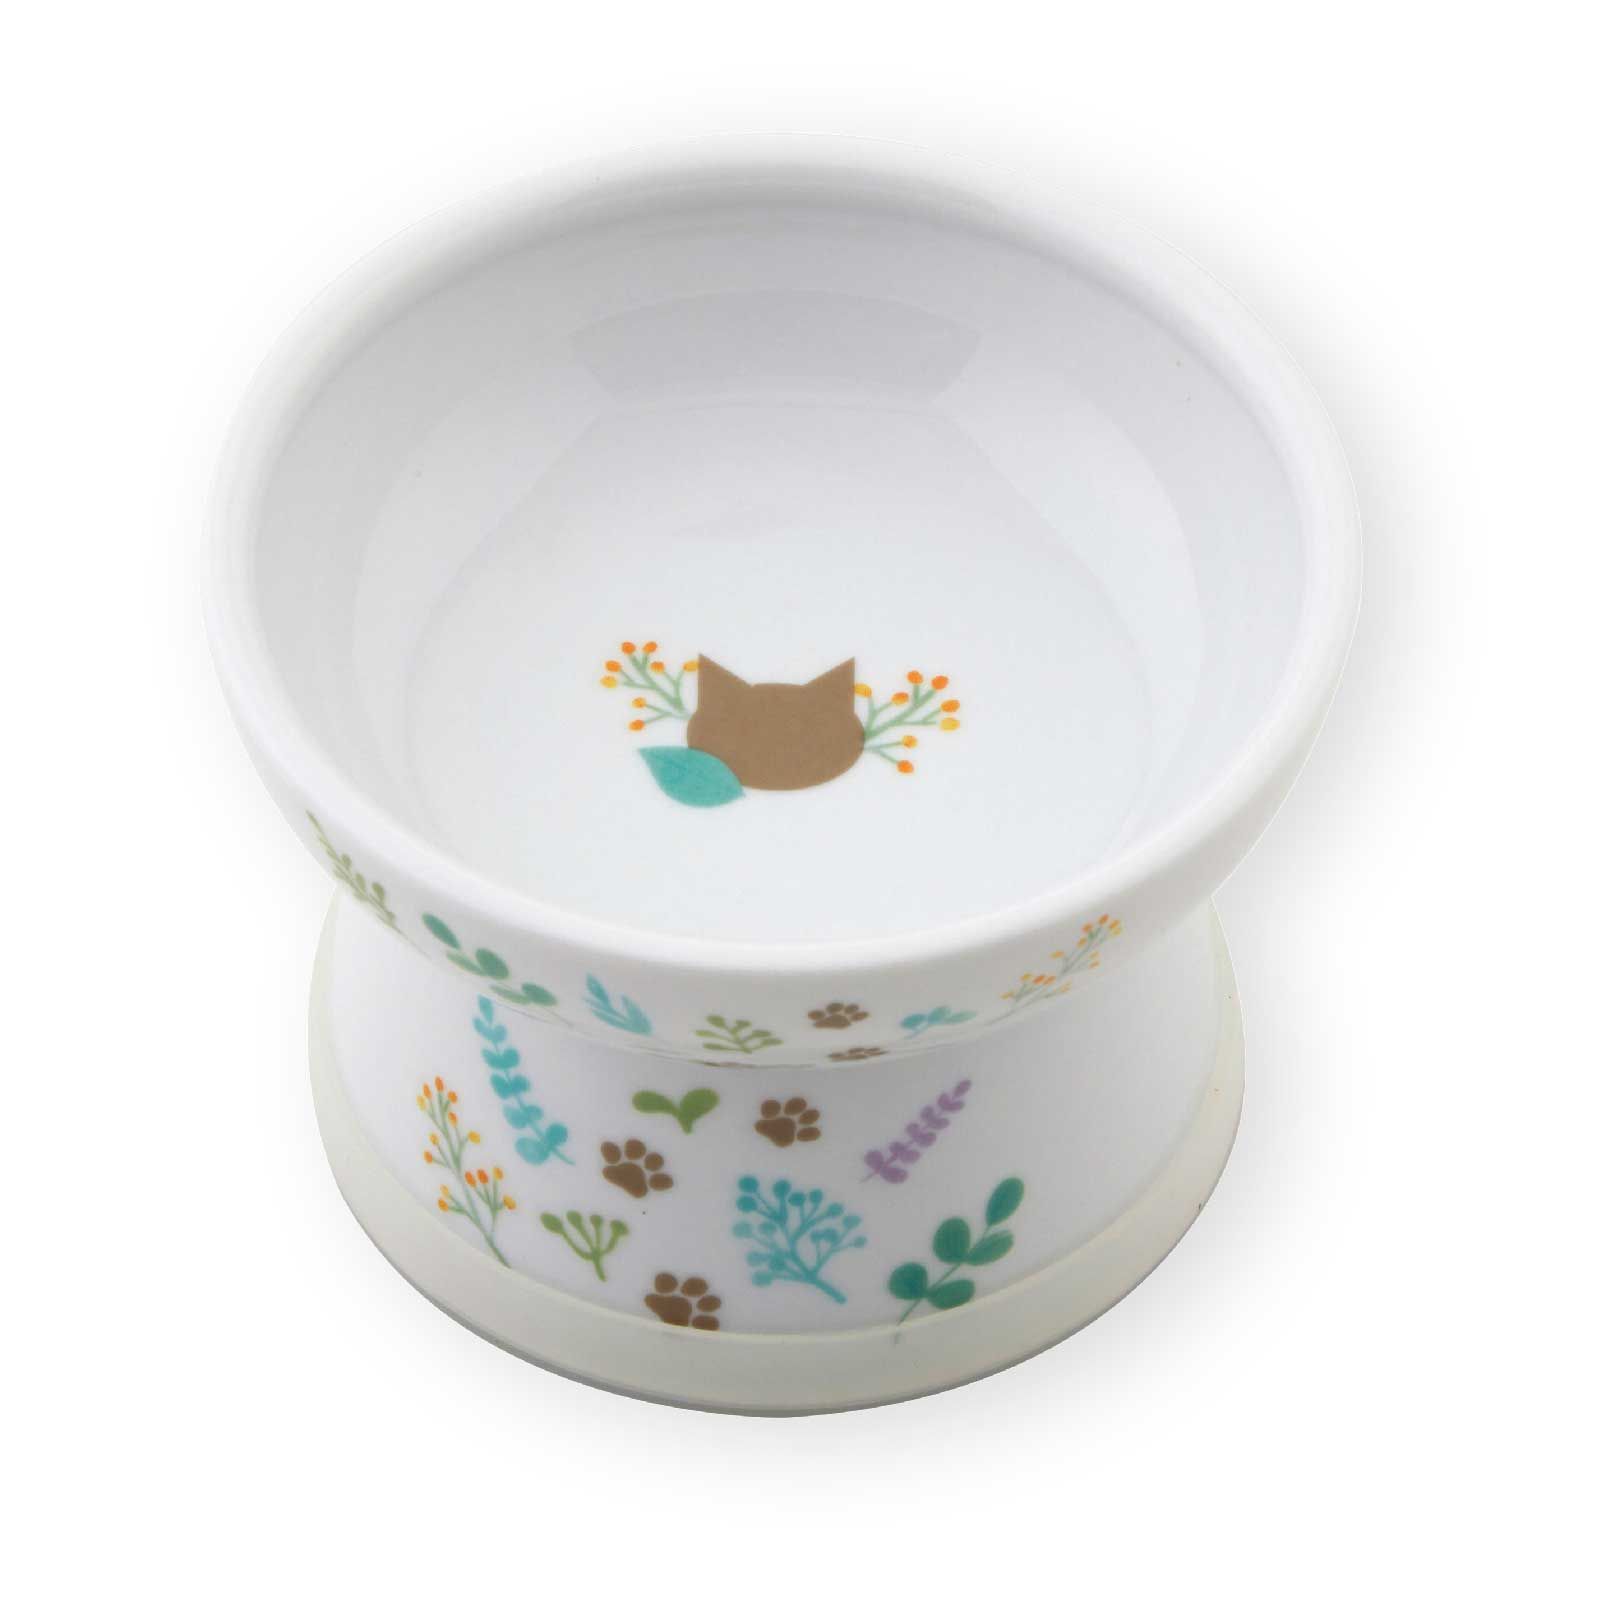 Necoichi Raised Cat Food and Water Bowl Set